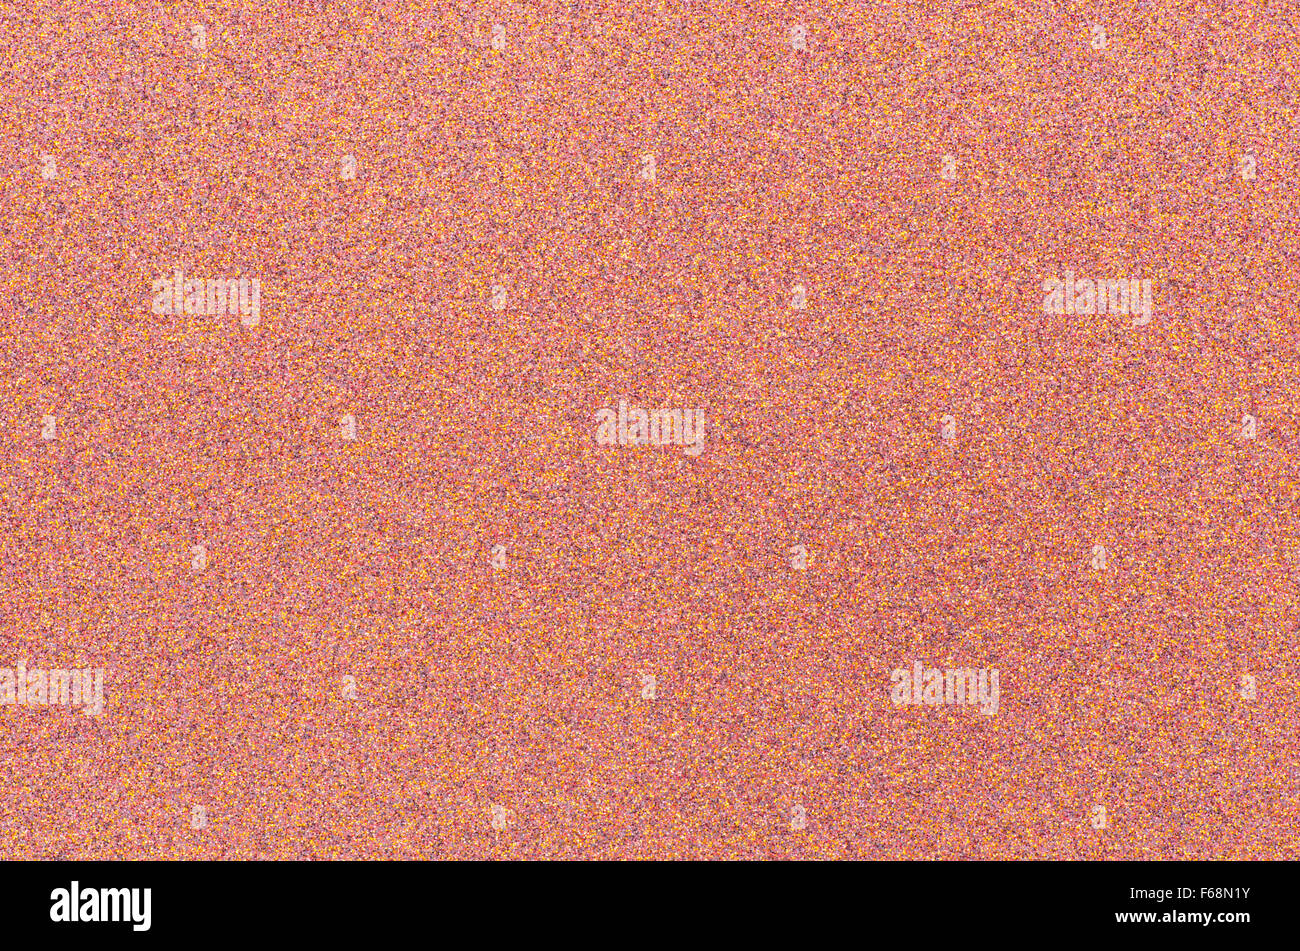 orange glittering paper texture background Stock Photo